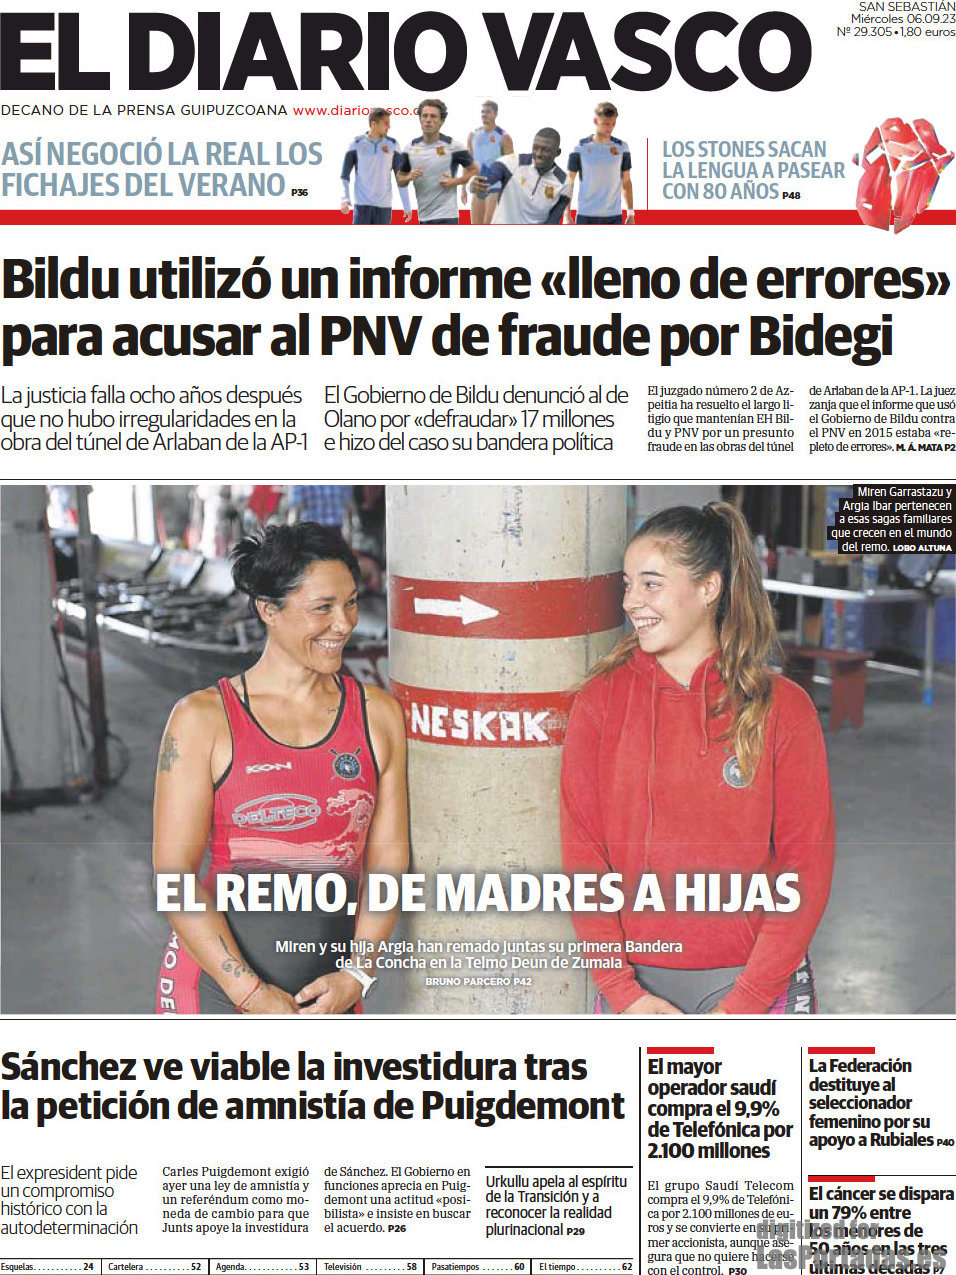 El Diario Vasco